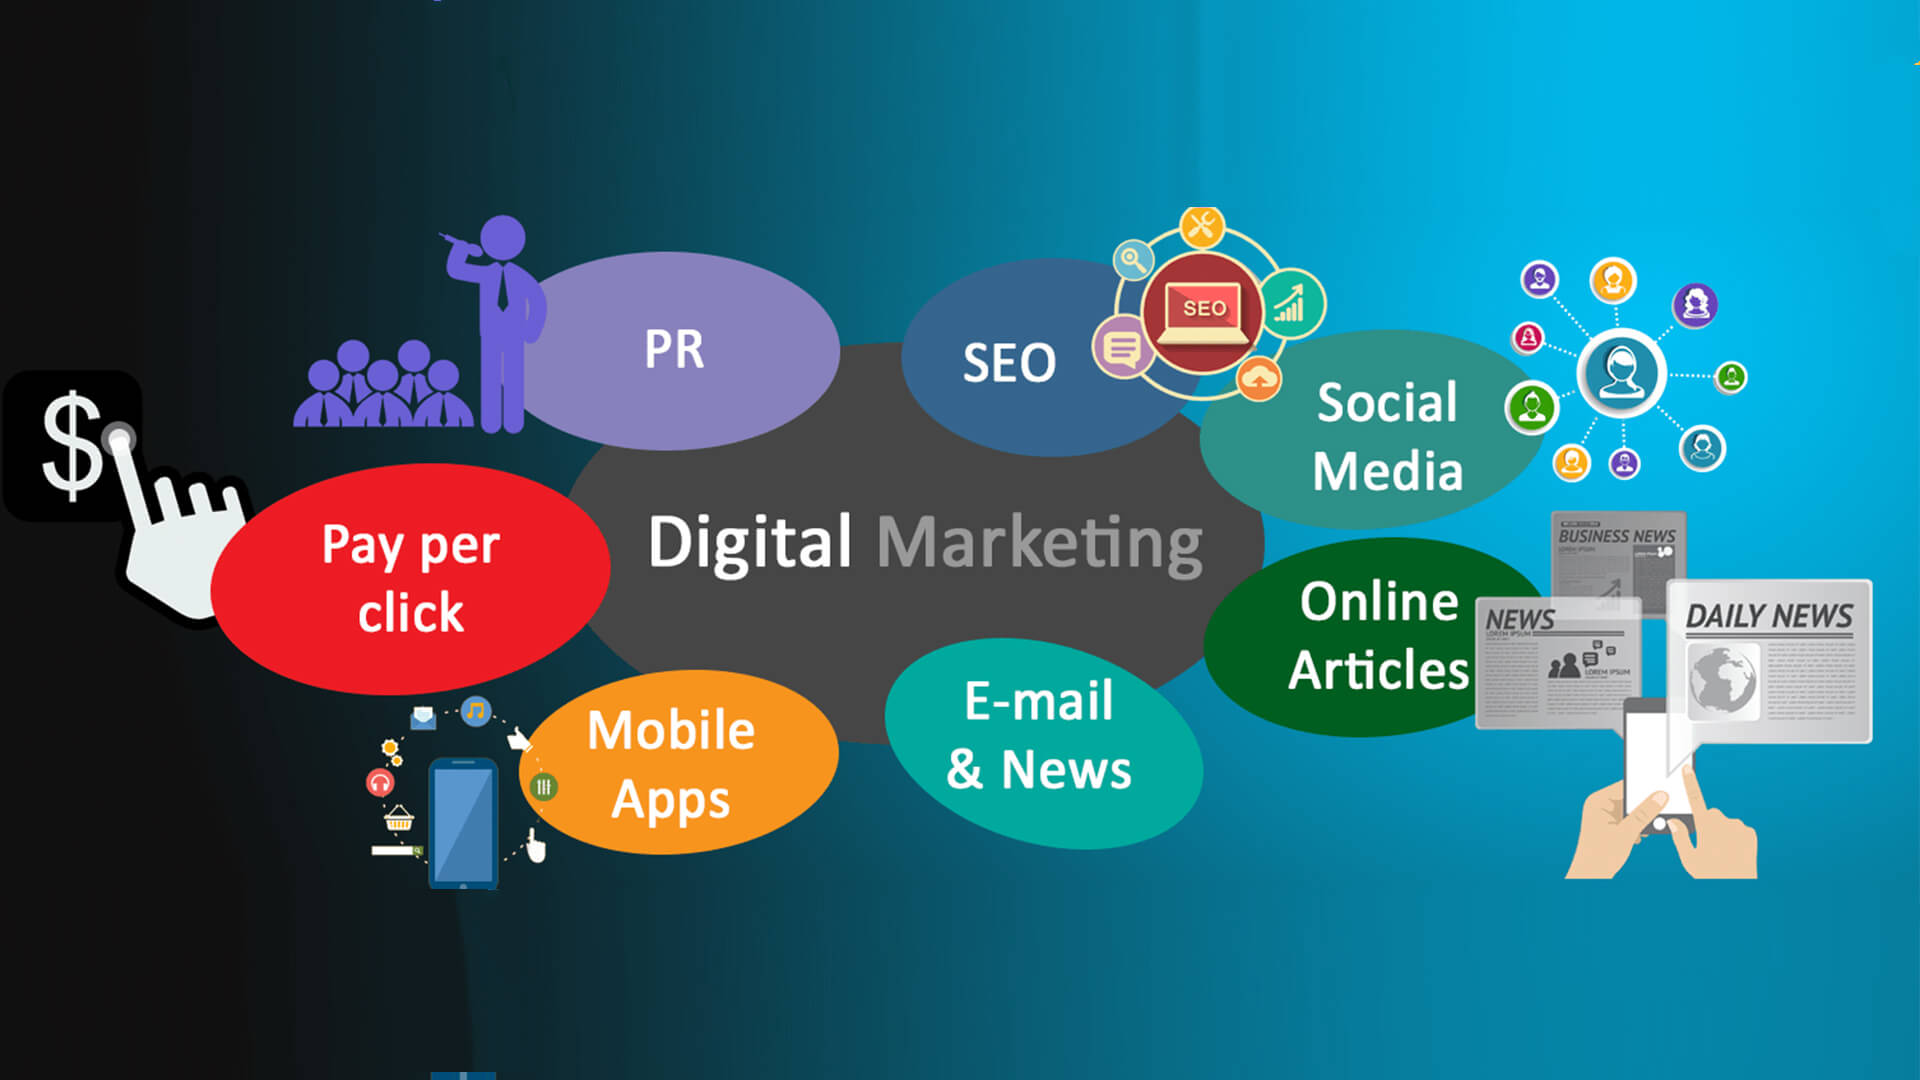 Digital Marketing Services in Trivandrum - Digital Marketing Companies in Trivandrum - Digital Marketing in Trivandrum - Merabt